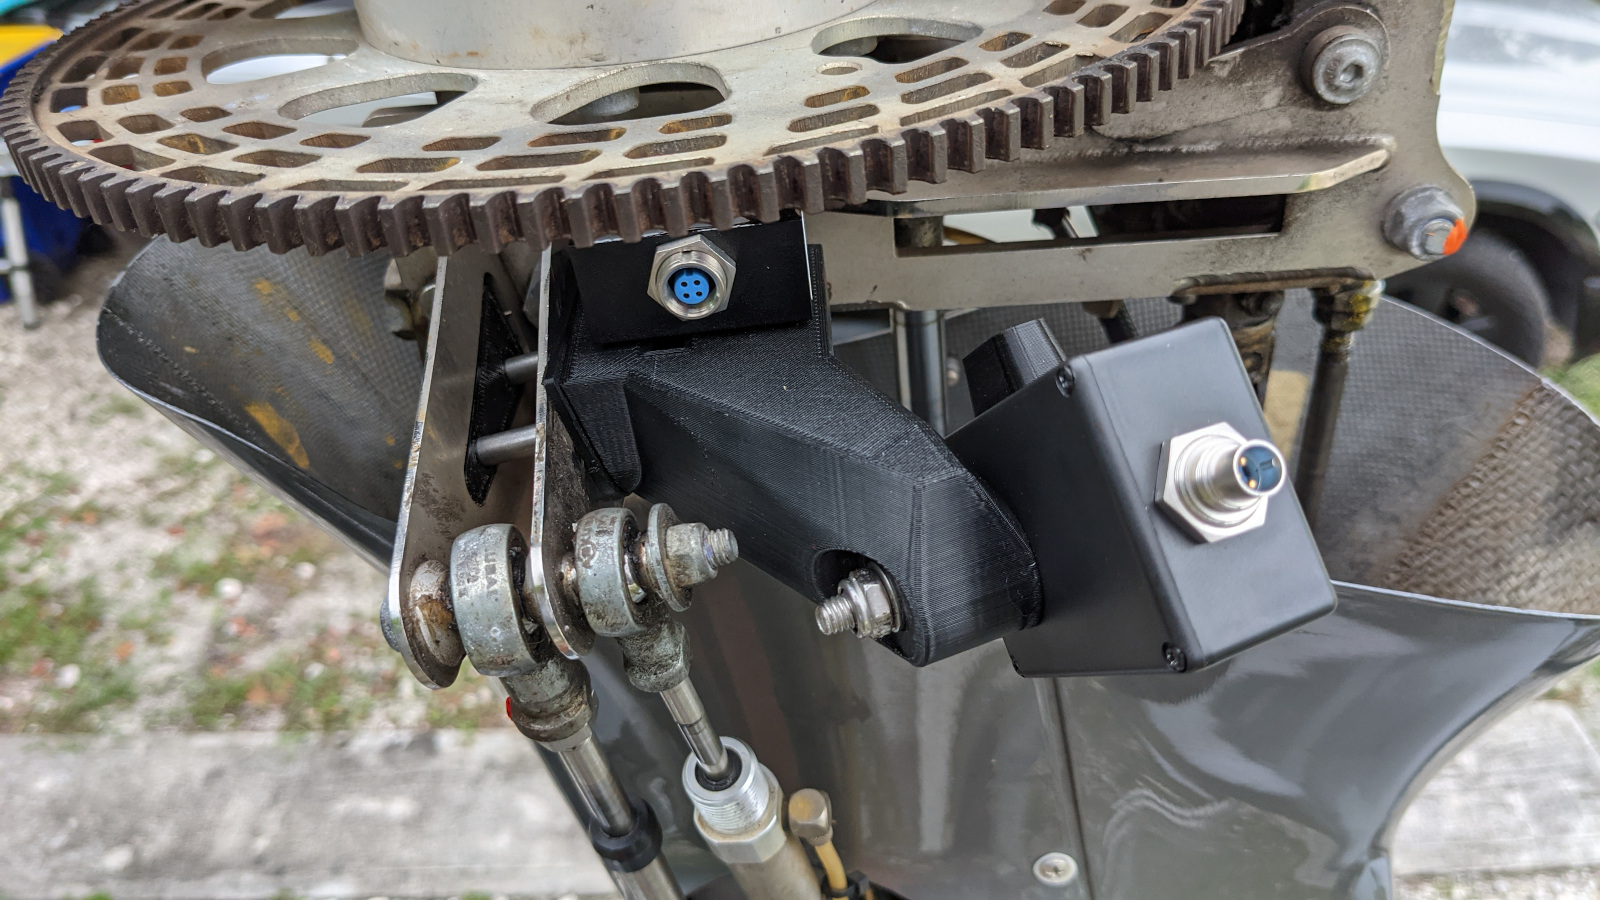 Sensors mounted on an AutoGyro Mk2 rotor head (left view)